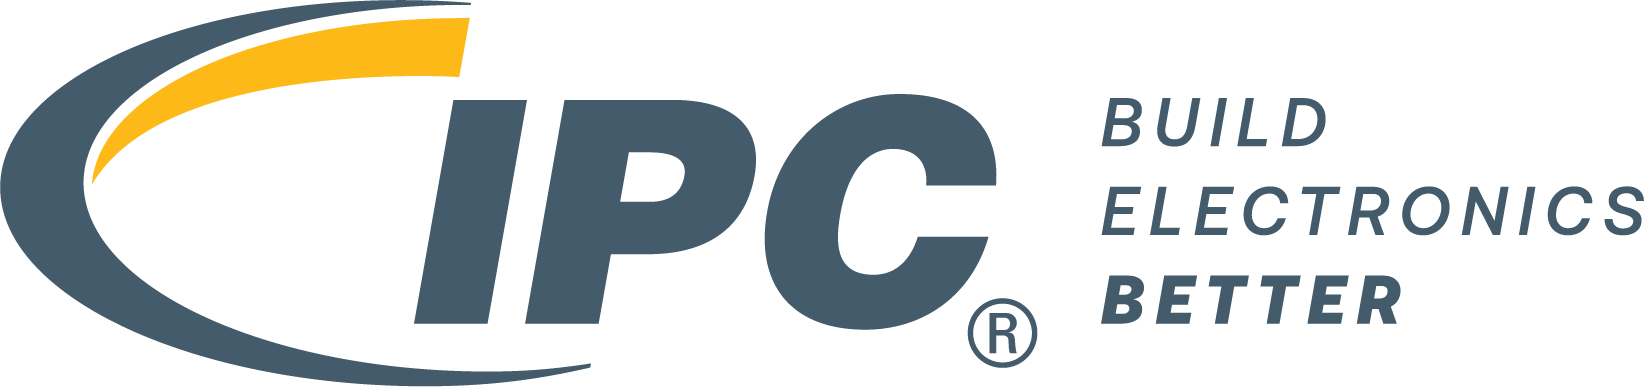 IPC/WHMA Certified